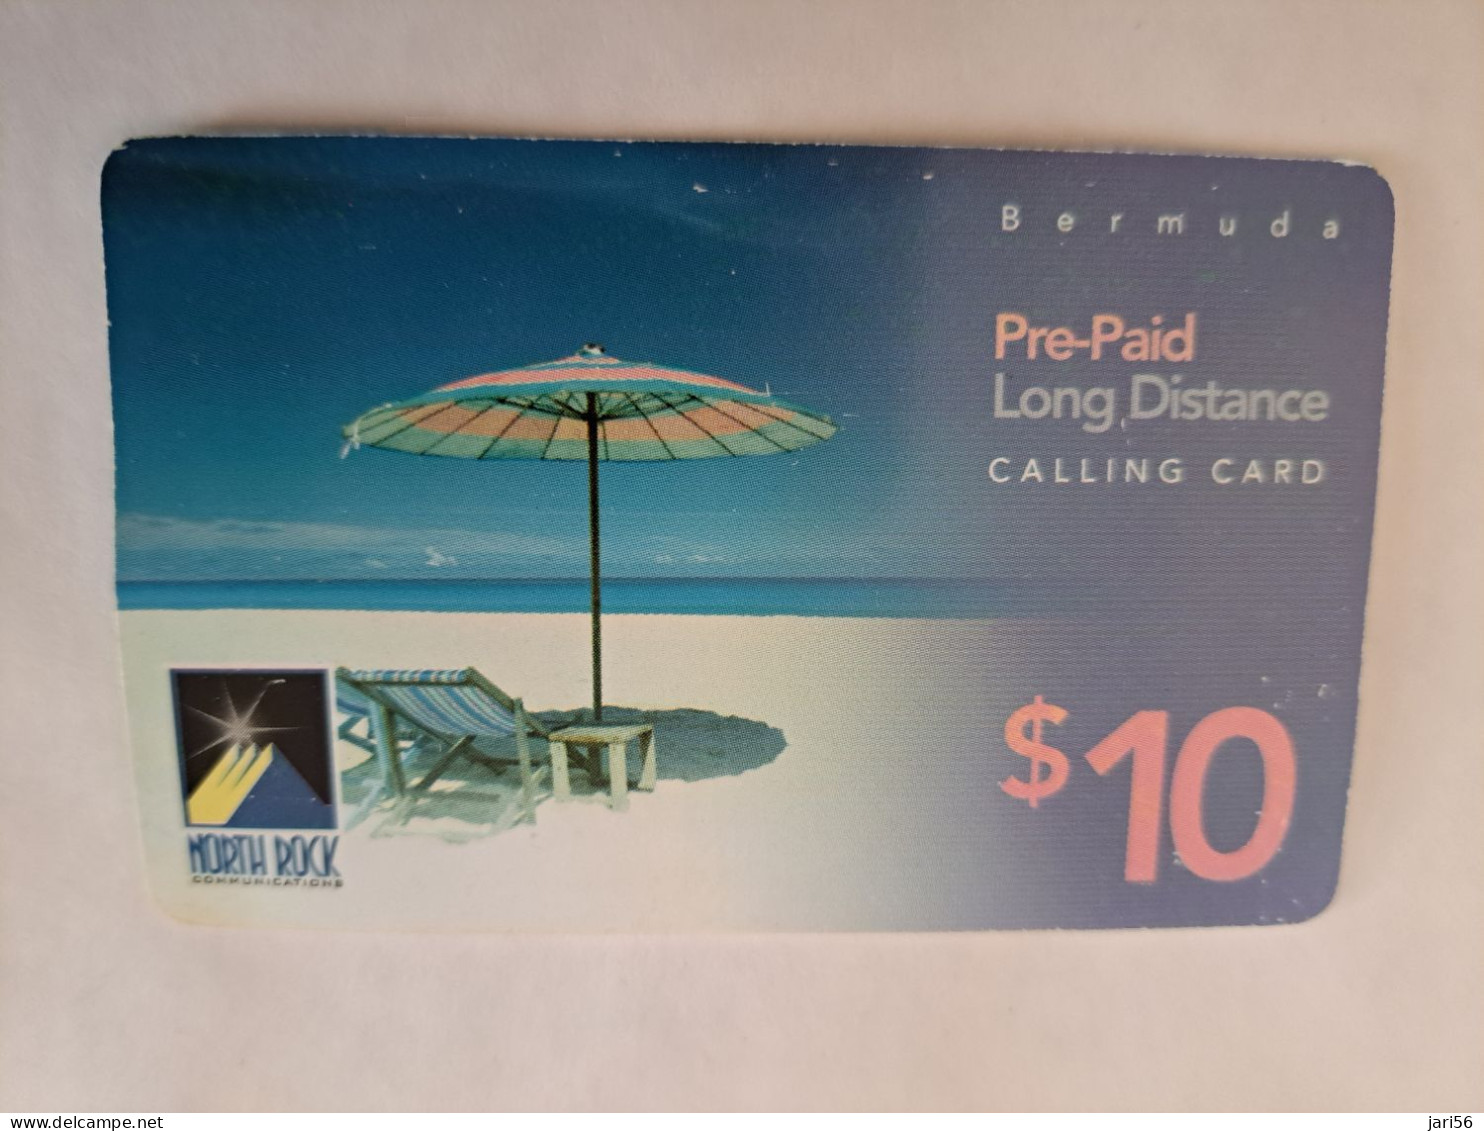 BERMUDA  $10,-,-NORTH ROCK   BERMUDA / PARASOL ON BEACH /  3/2005/   PREPAID CARD  Fine USED  **14794** - Bermudes